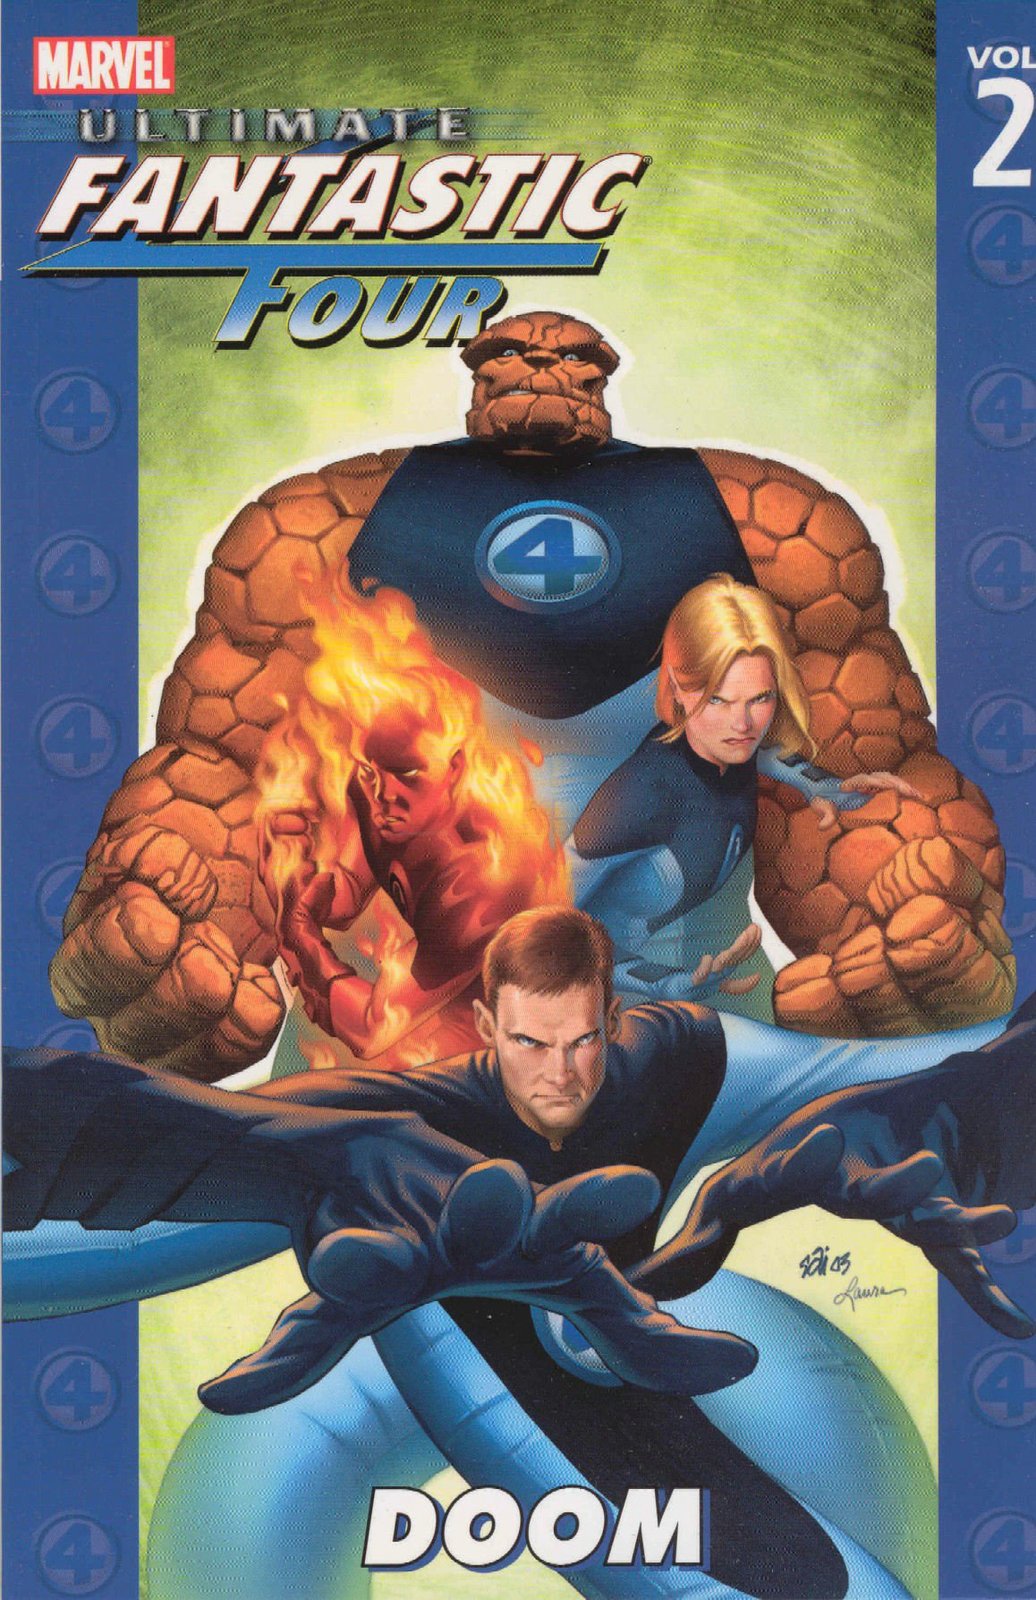 Primary image for Ultimate Fantastic Four Vol. 2: Doom Ellis, Warren and Immonen, Stuart